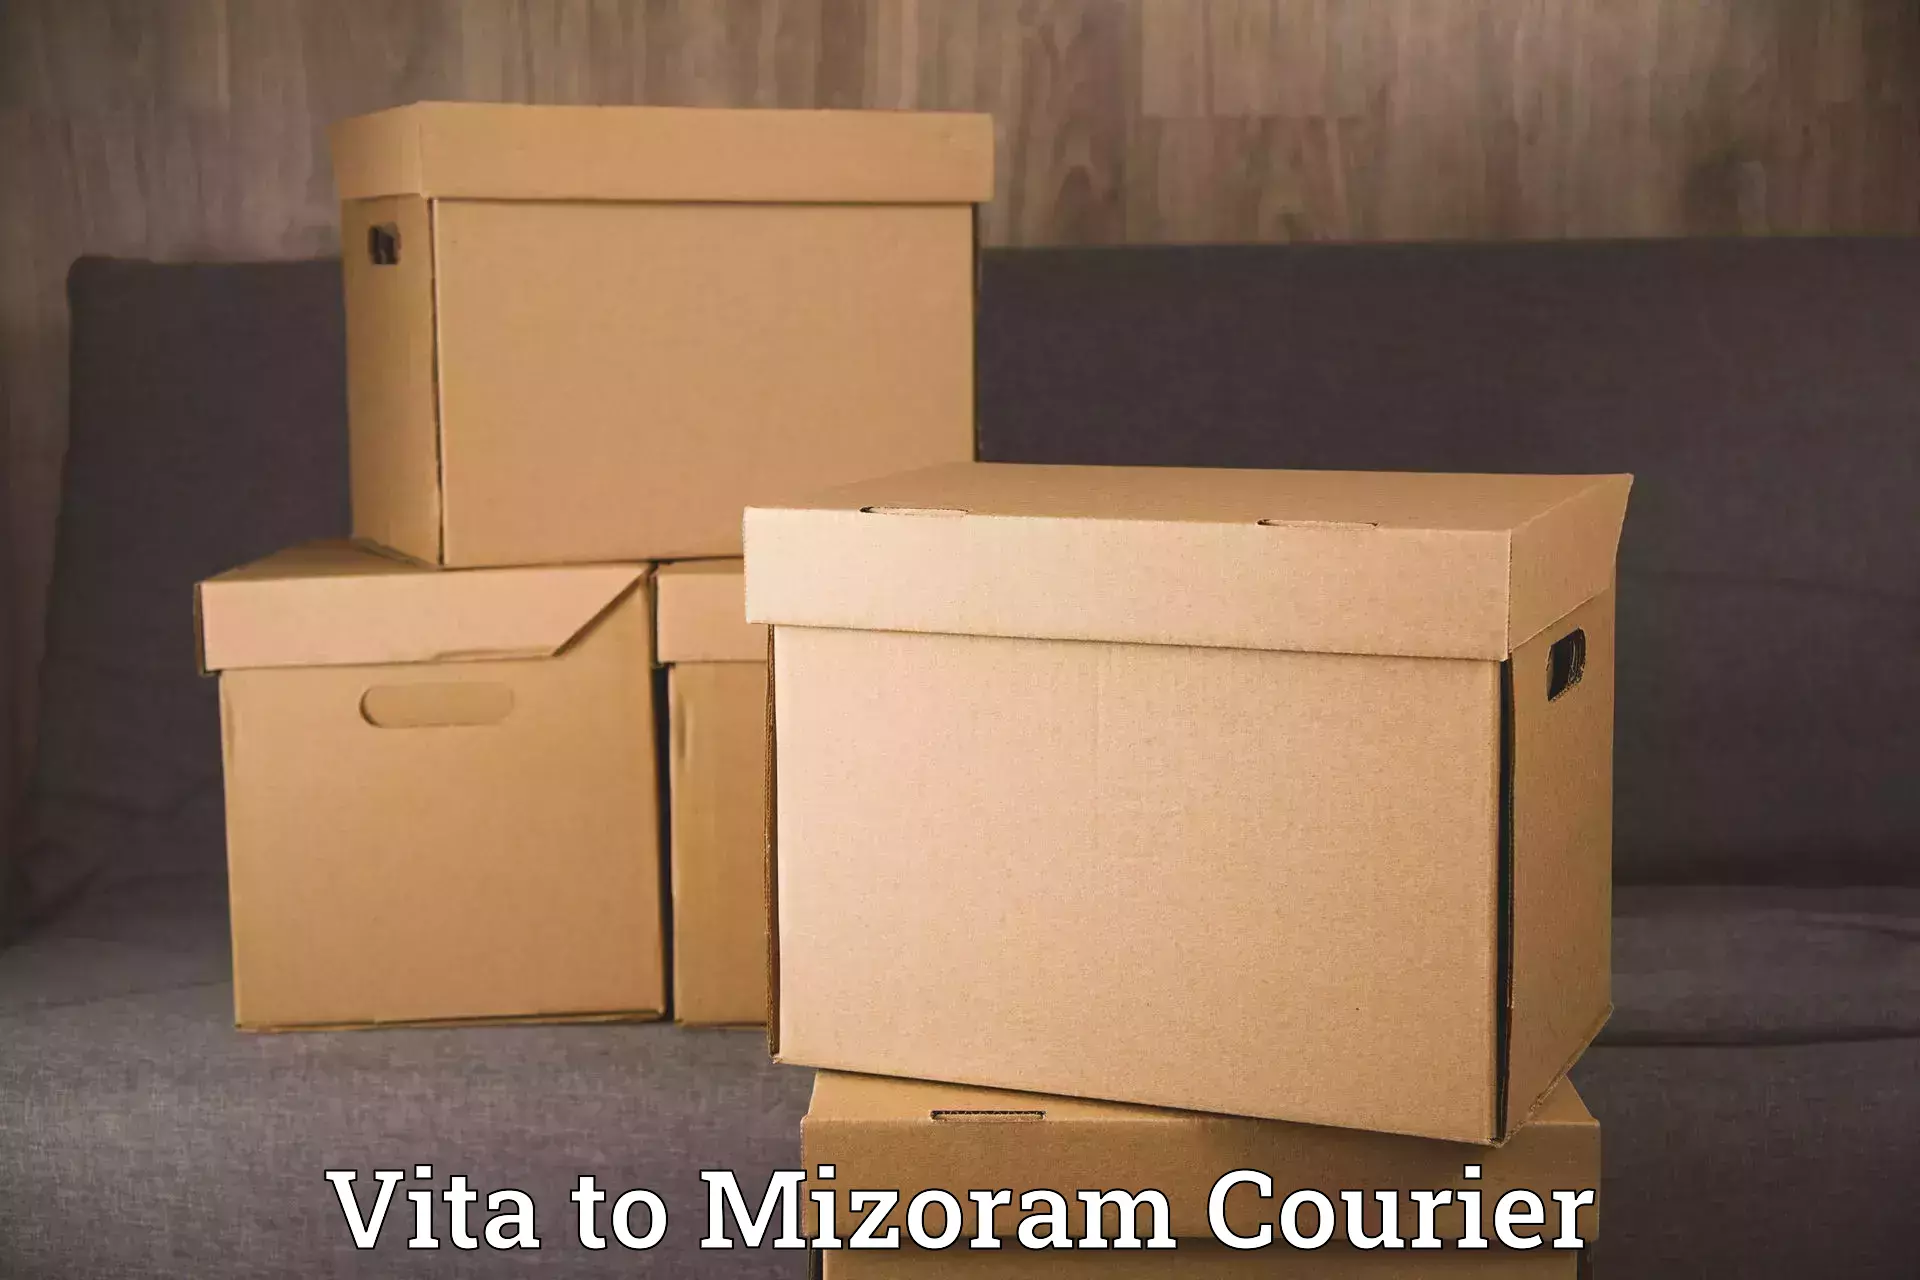 Trusted relocation experts Vita to Mizoram